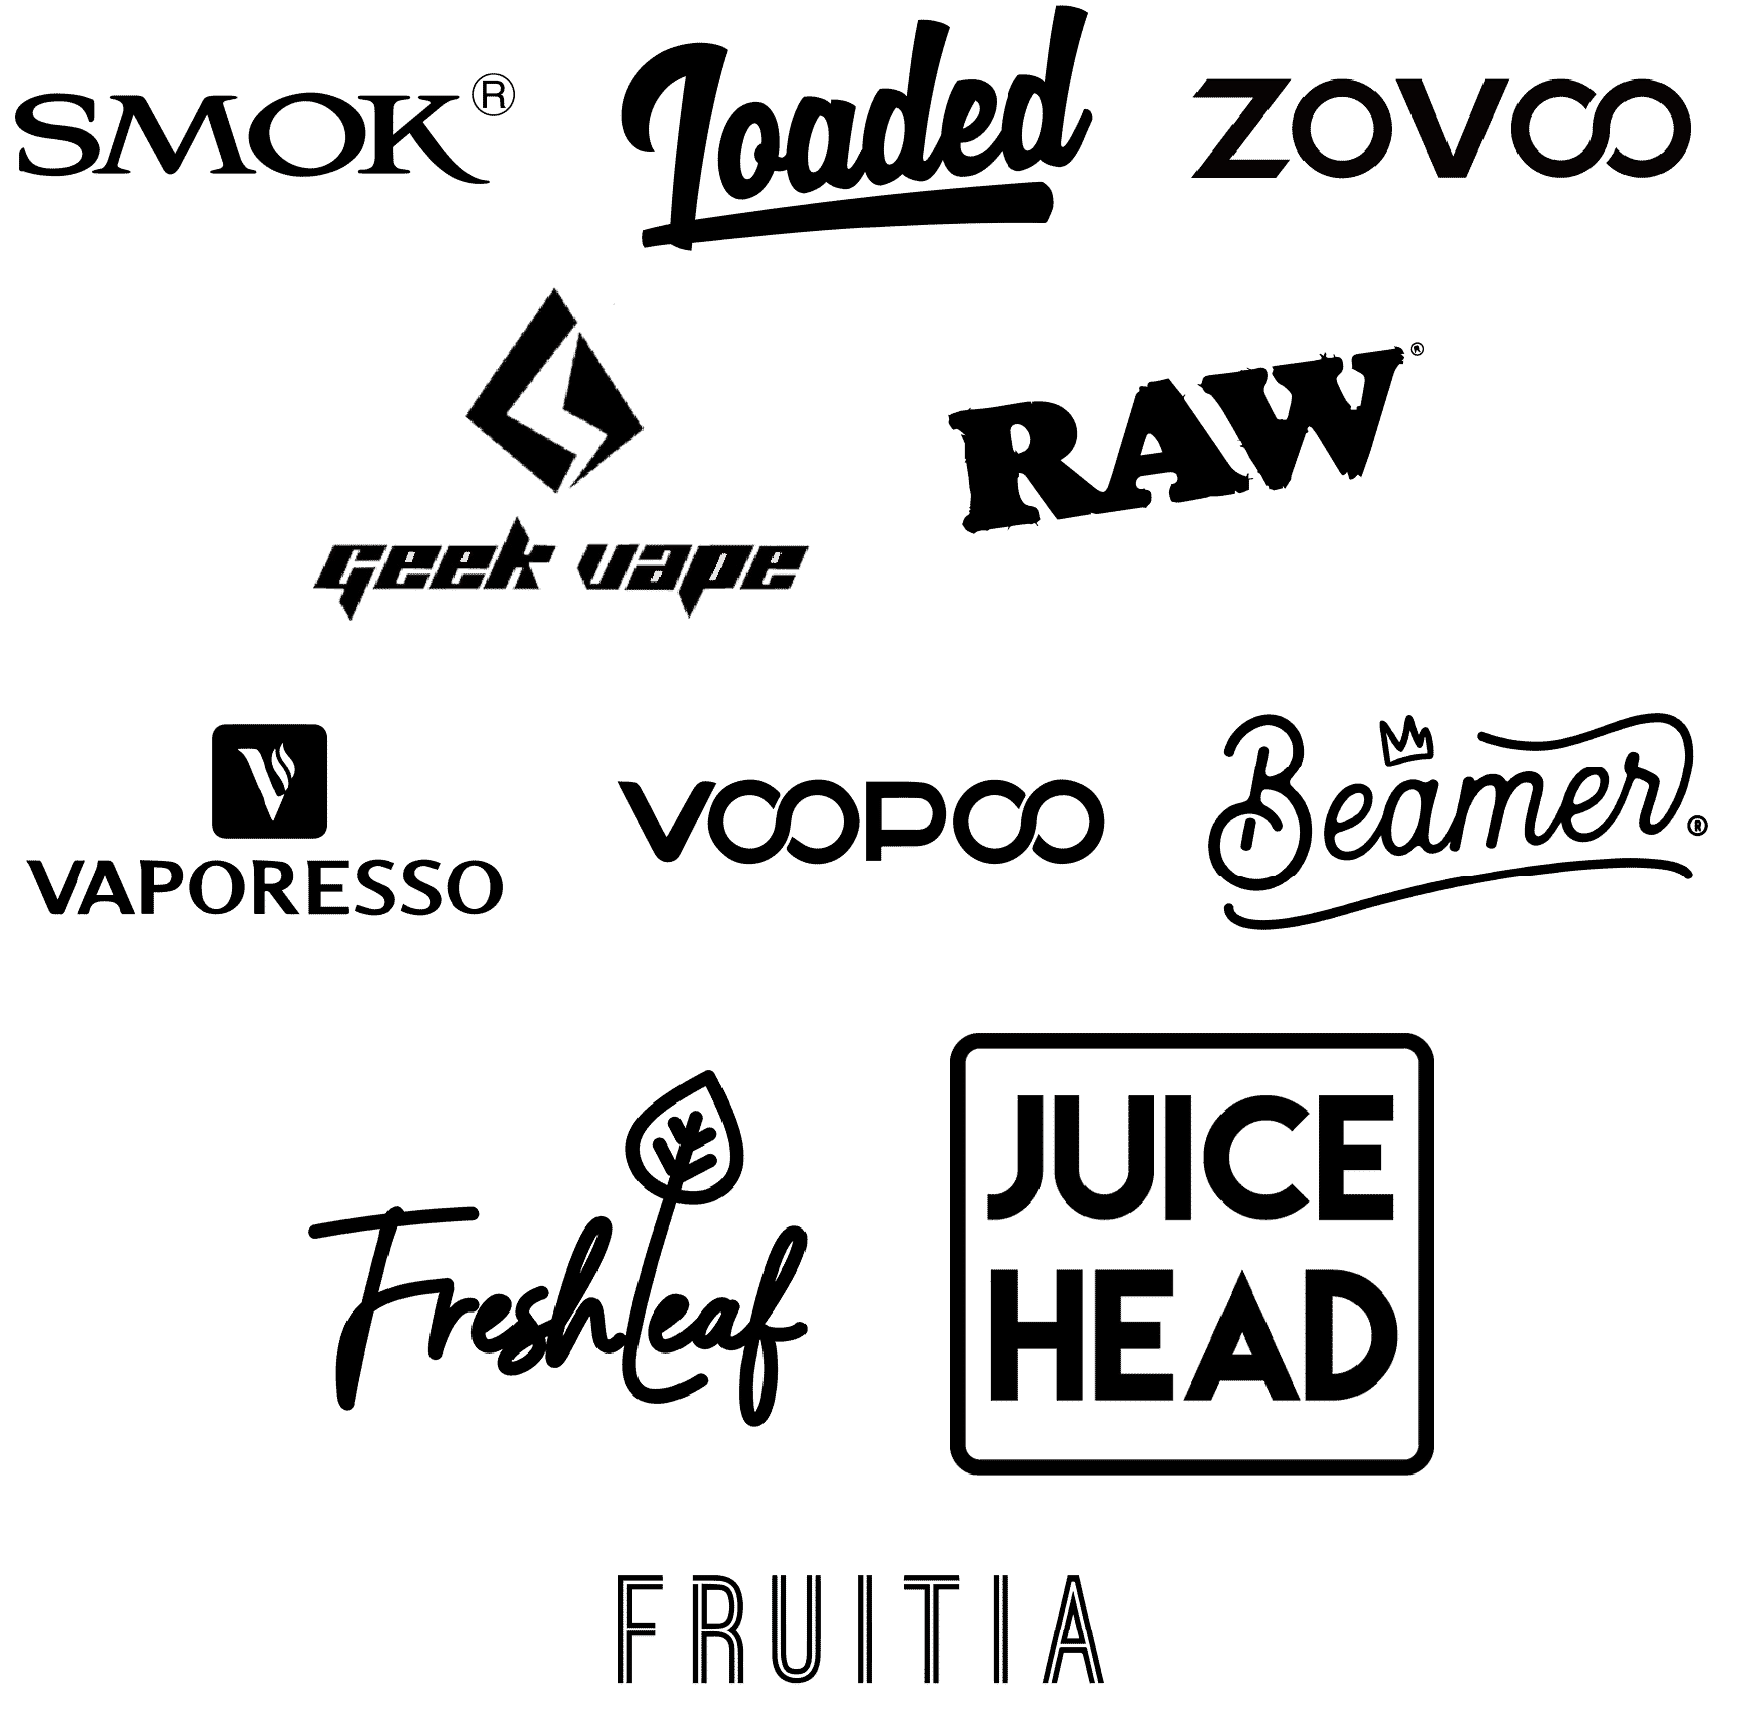 image of logos for smok, loaded, zovoo, geek vape, raw, vaporesso, voopoo, beamer, freashleaf kratom, juice head e-liquid, and fruitia e-juice